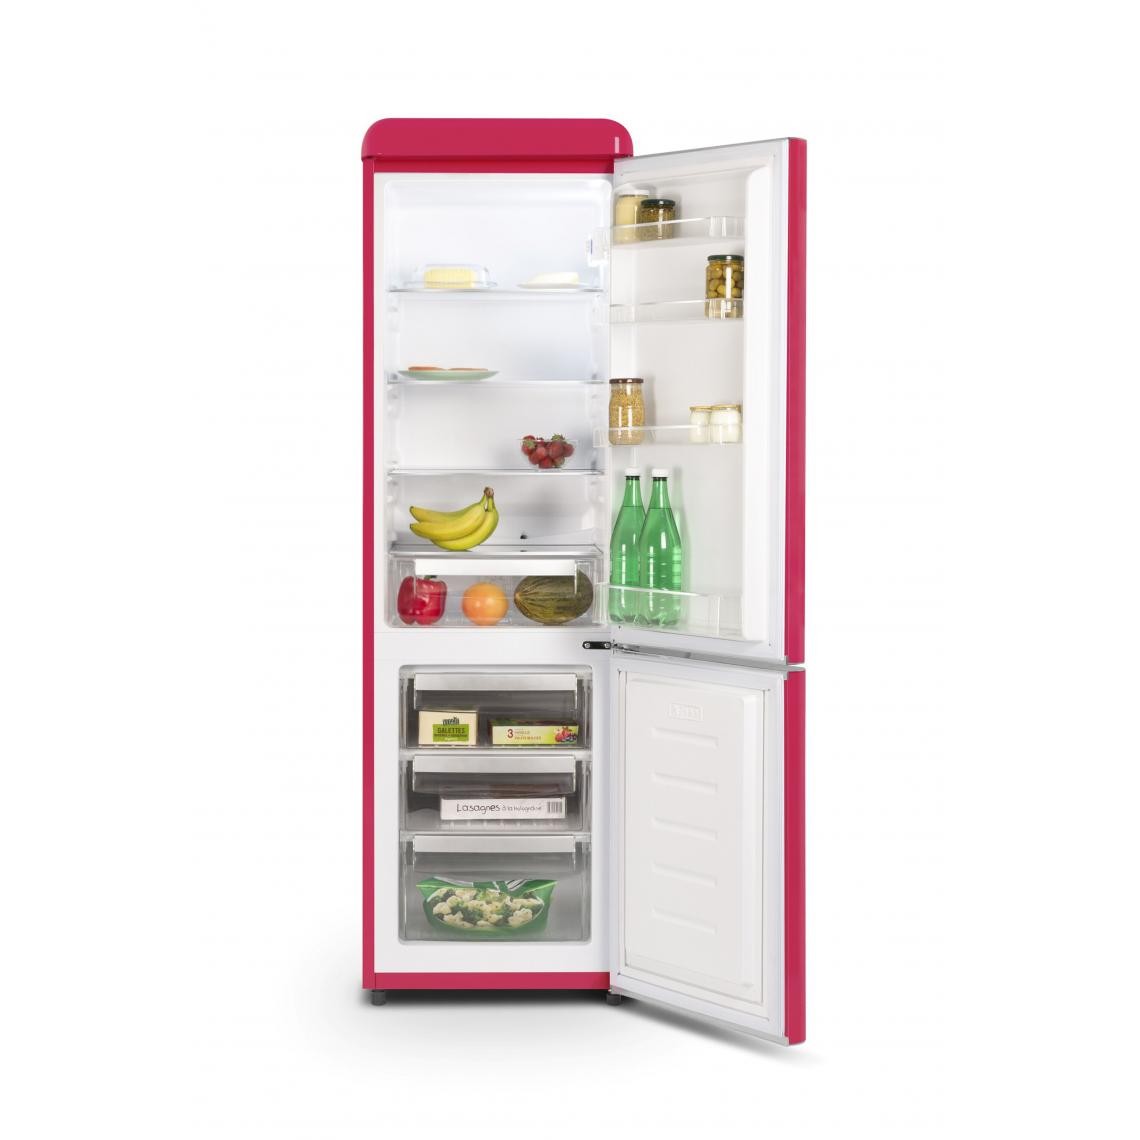 Schneider - Refrigerateur congelateur en bas Schneider SCCB250VHAW - Réfrigérateur